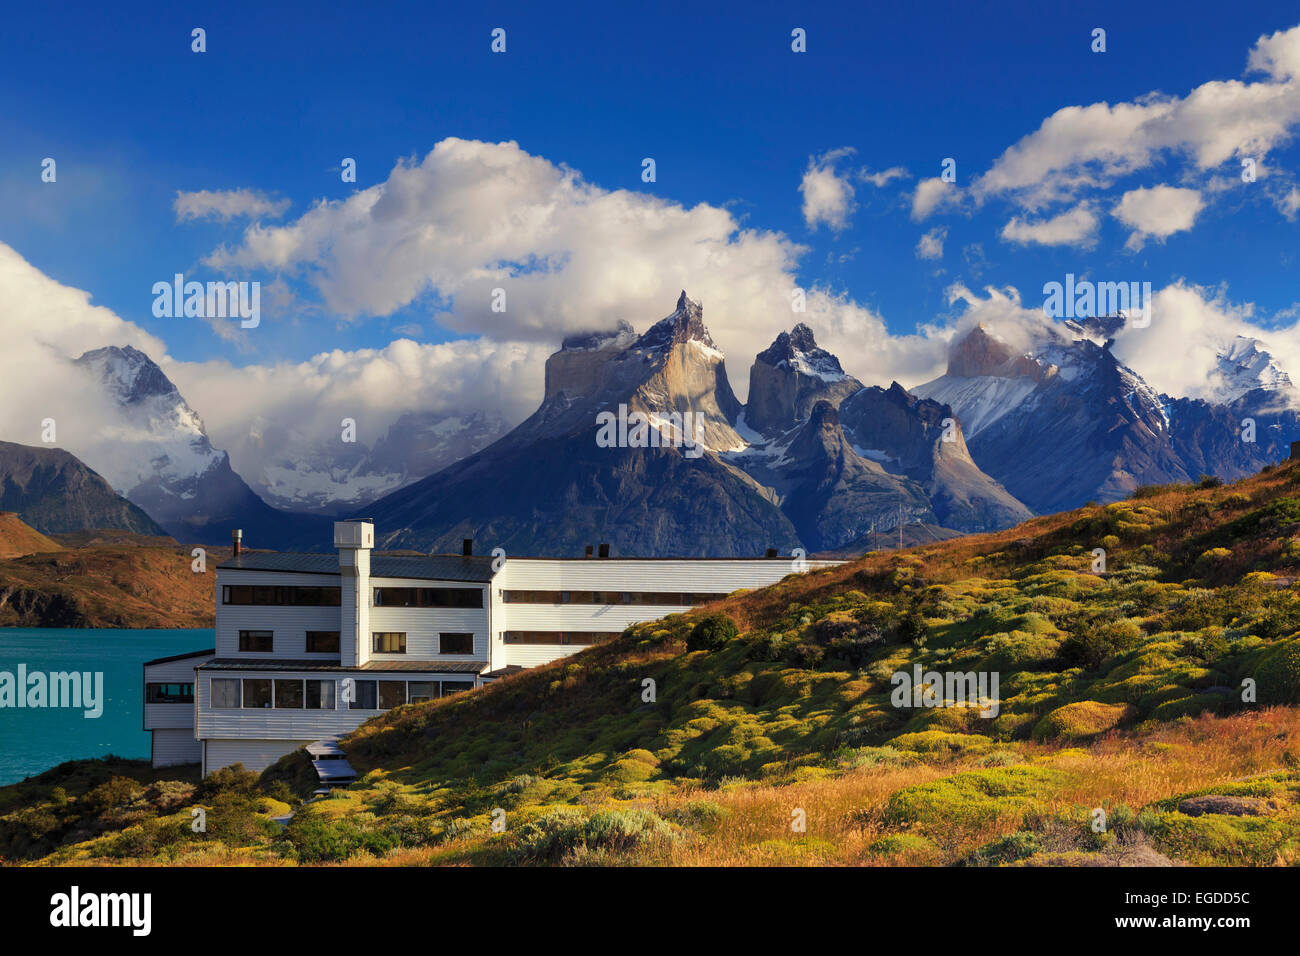 Chile, Patagonia, Torres del Paine National Park (UNESCO Site), Cuernos del Paine peaks and Luxury Hotel Explora Stock Photo